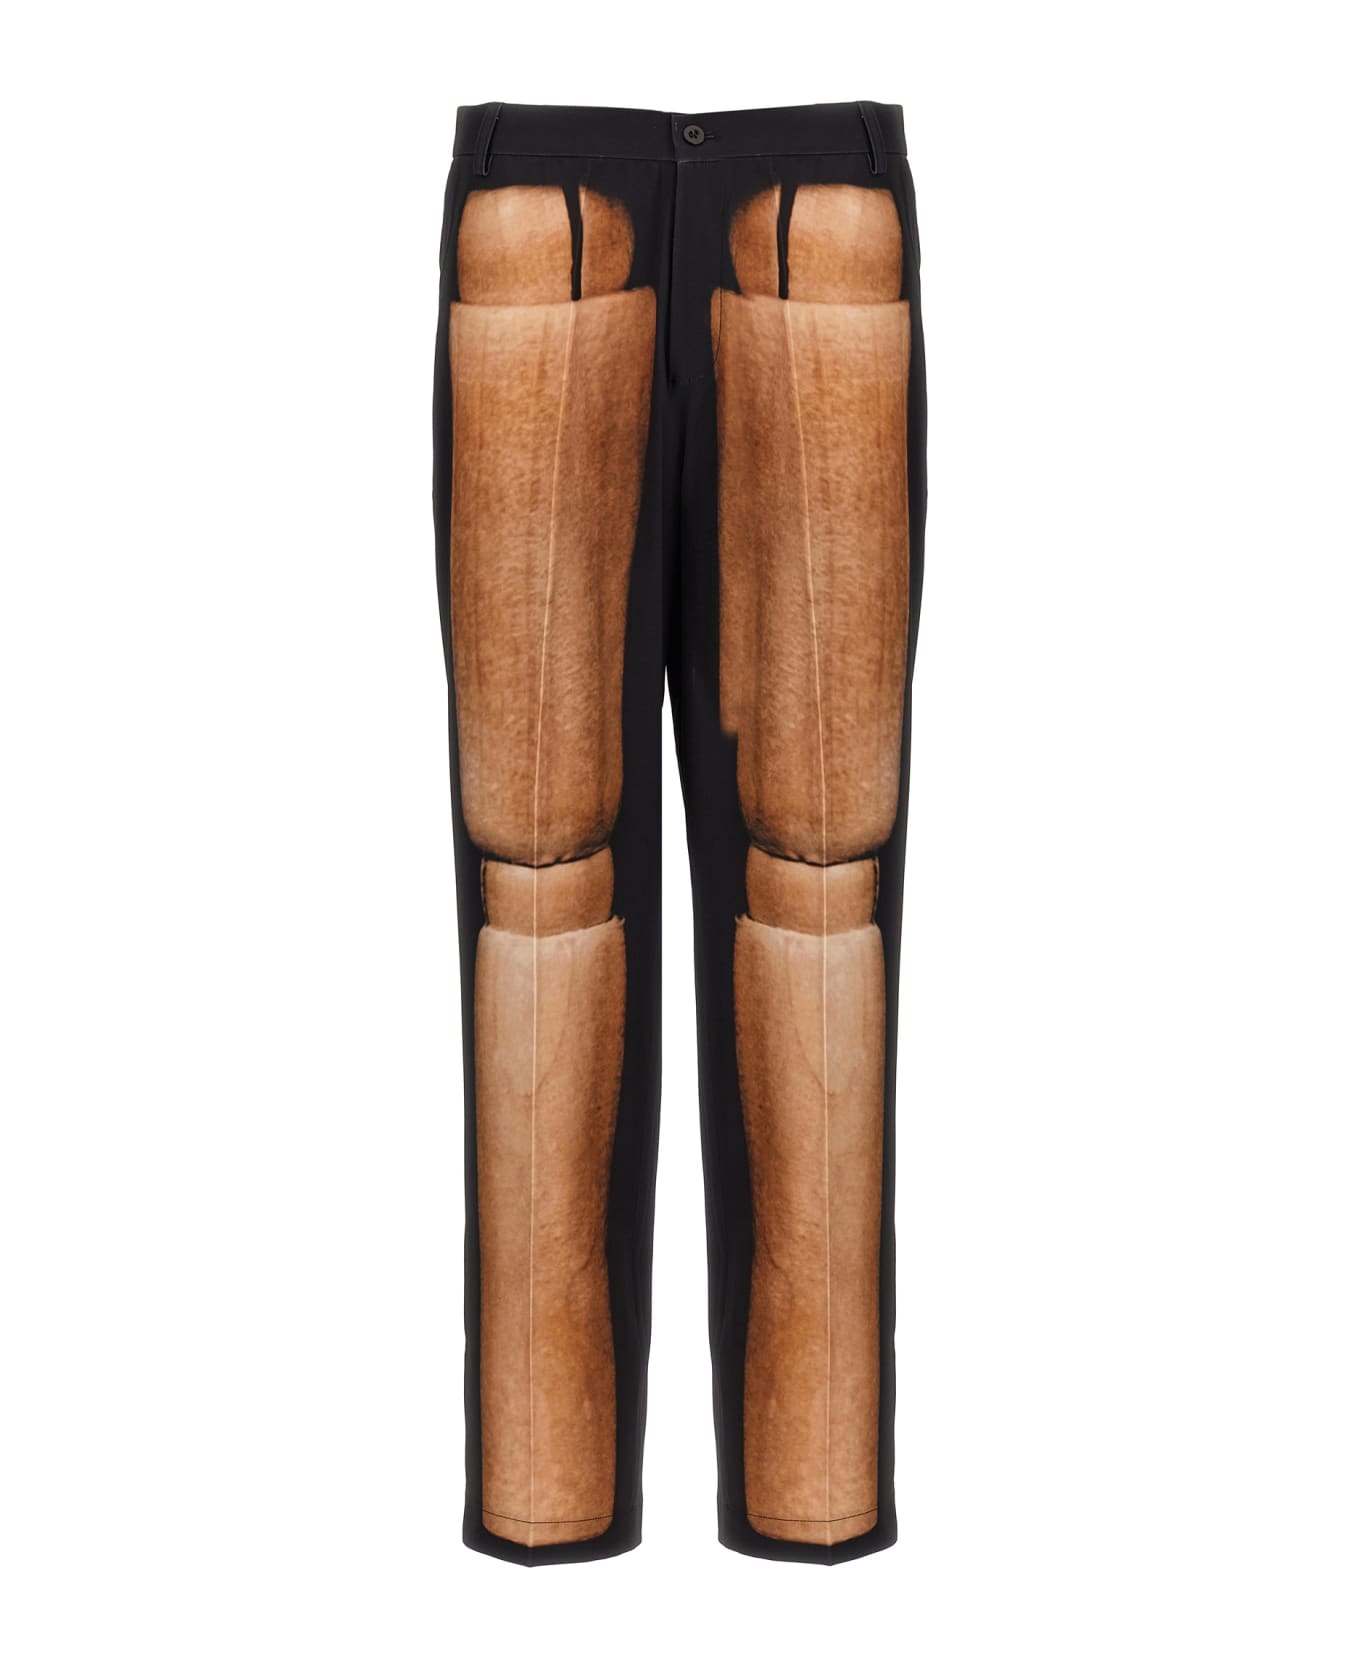 Kidsuper 'mannequin Suit Bottom' Trousers - Black  